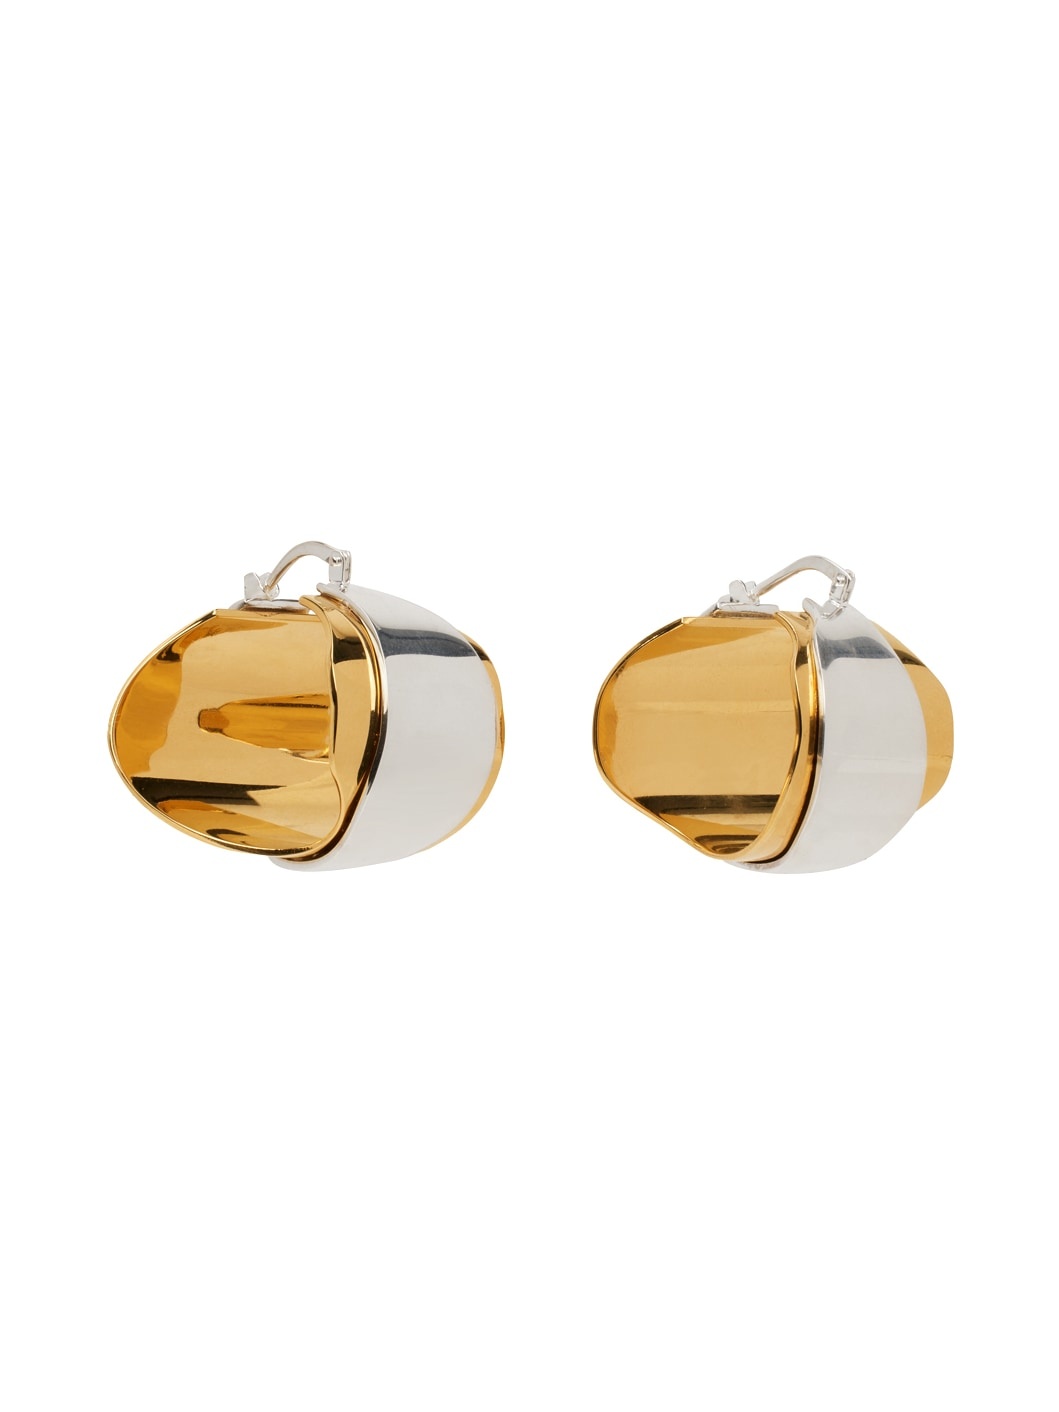 Silver & Gold AW3 Earrings - 2